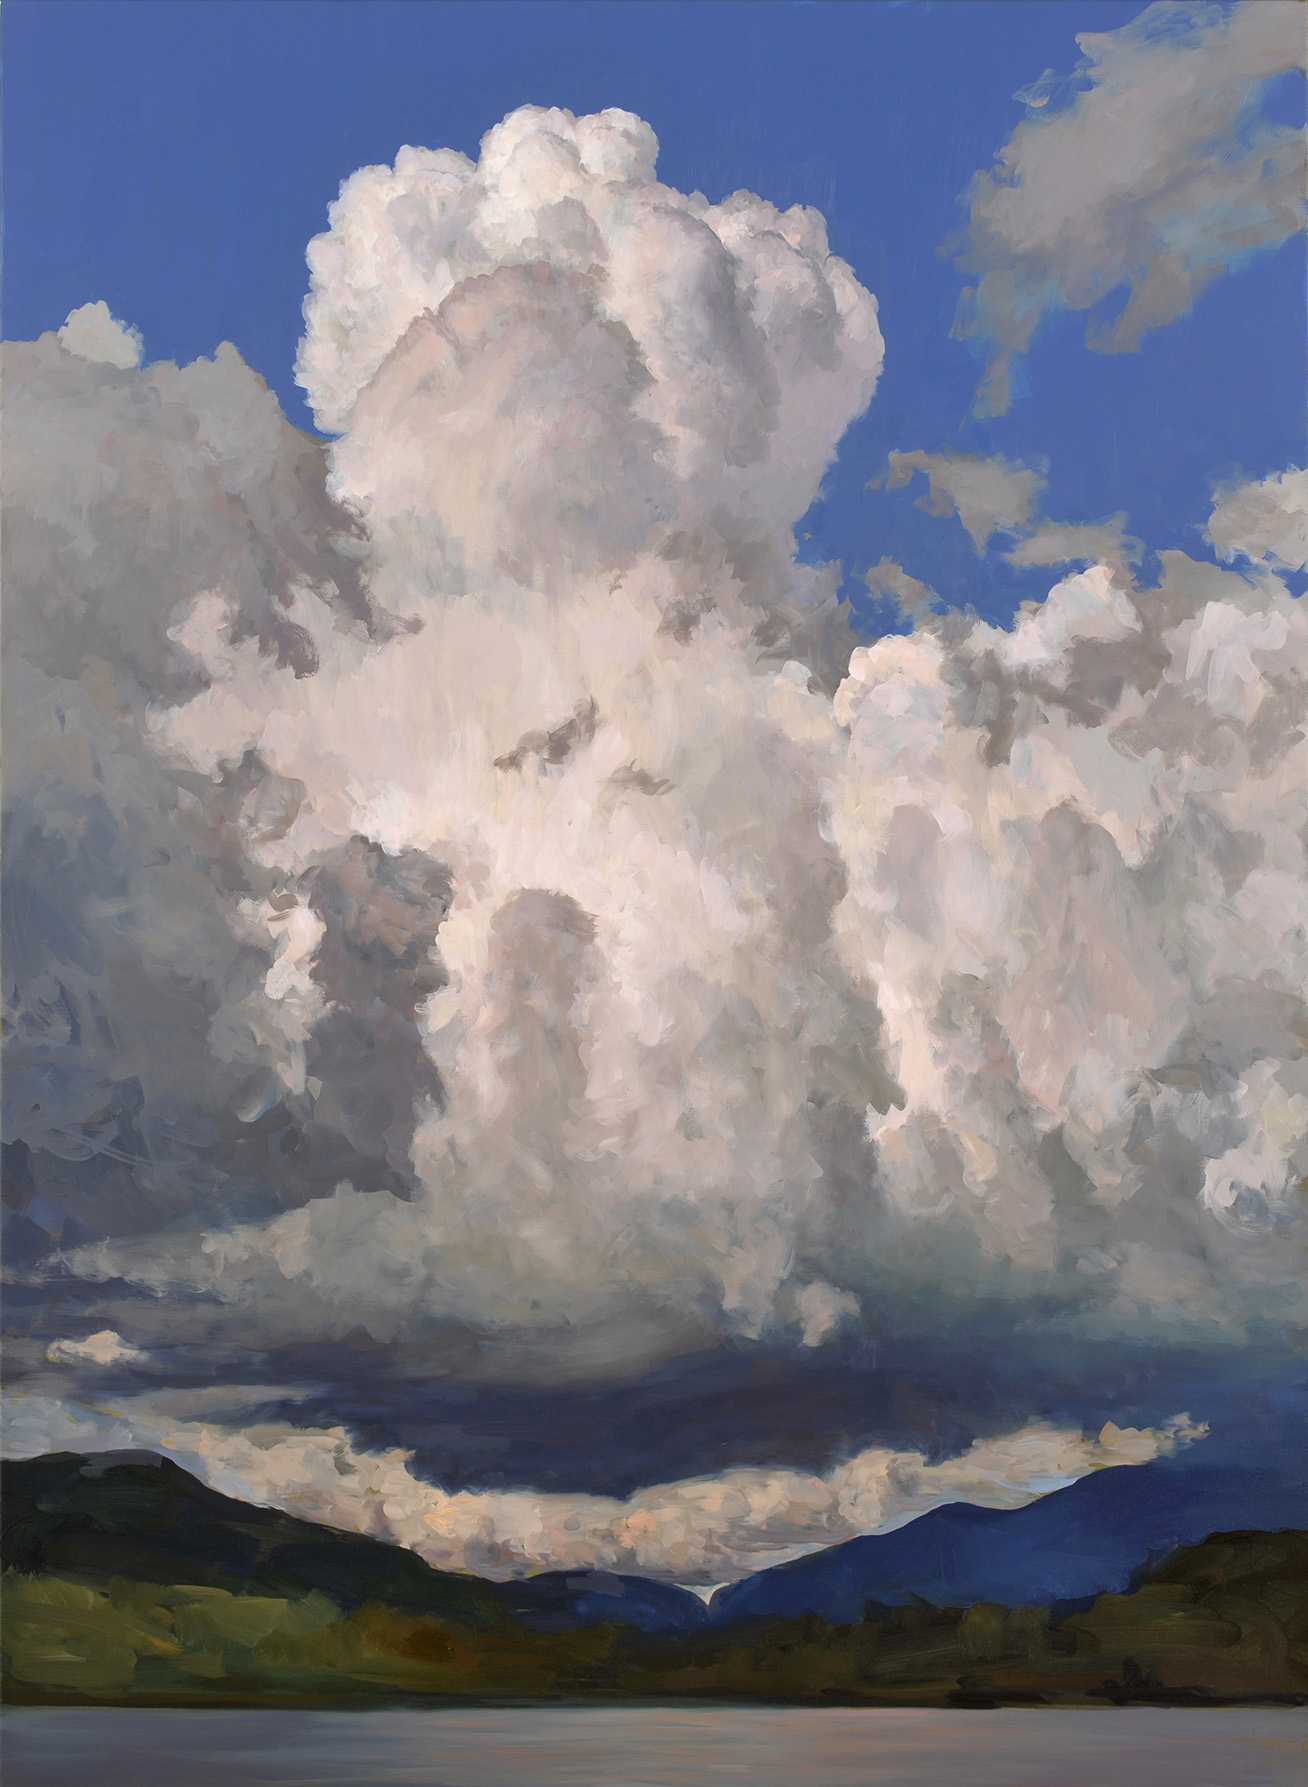  Boom Cloud; oil on linen, 52 x 38